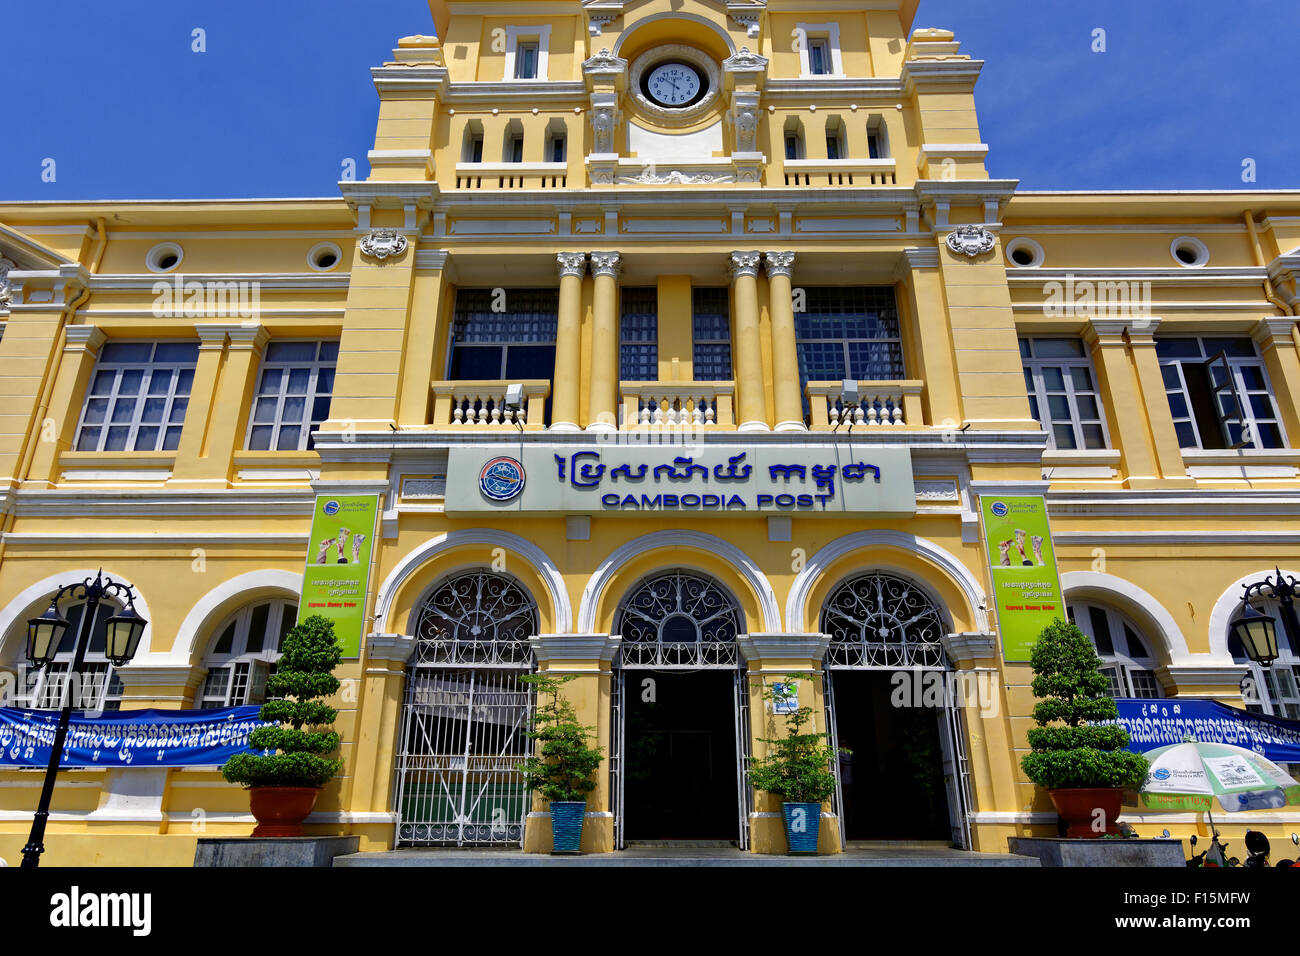 Cambodia Head Post Office, Phnom Penh, Cambodia, Khmer, Clock, Blue sky, bushes, stamps, money, posting, postmen, ornate buildin Stock Photo